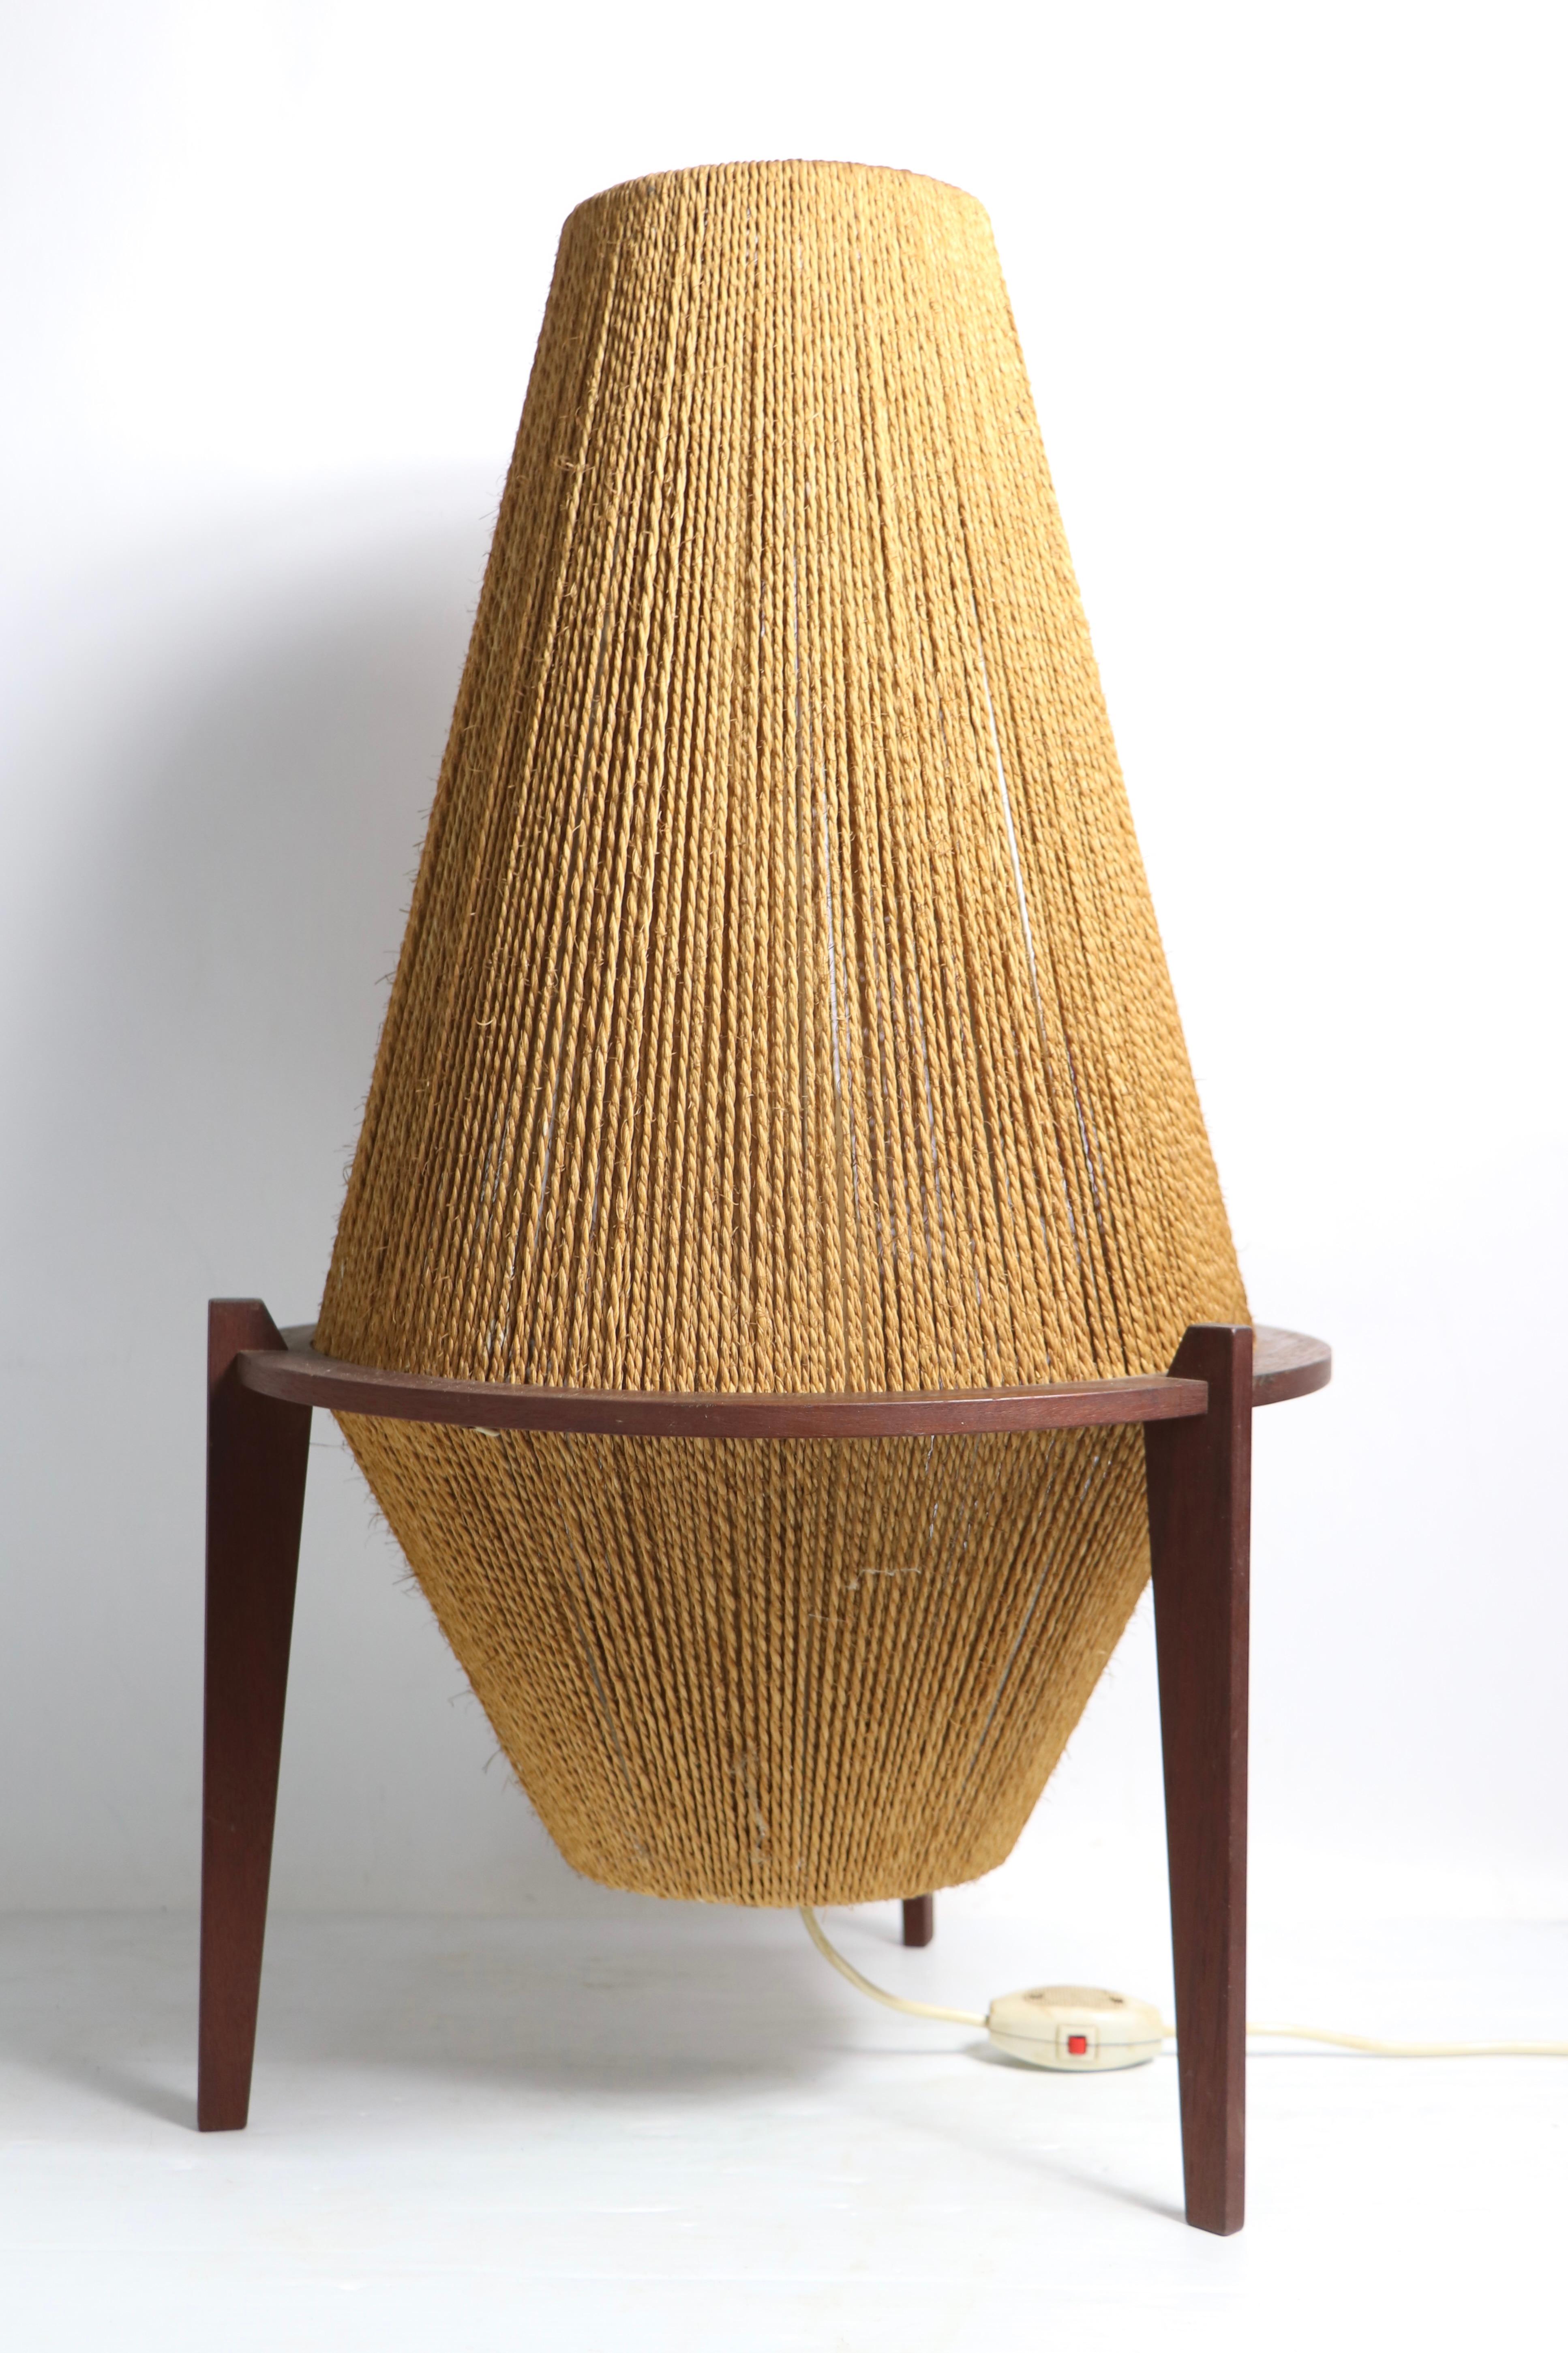 Scandinavian Modern Mid Century String Lamp by I B Fabiasen for Fog and Morup